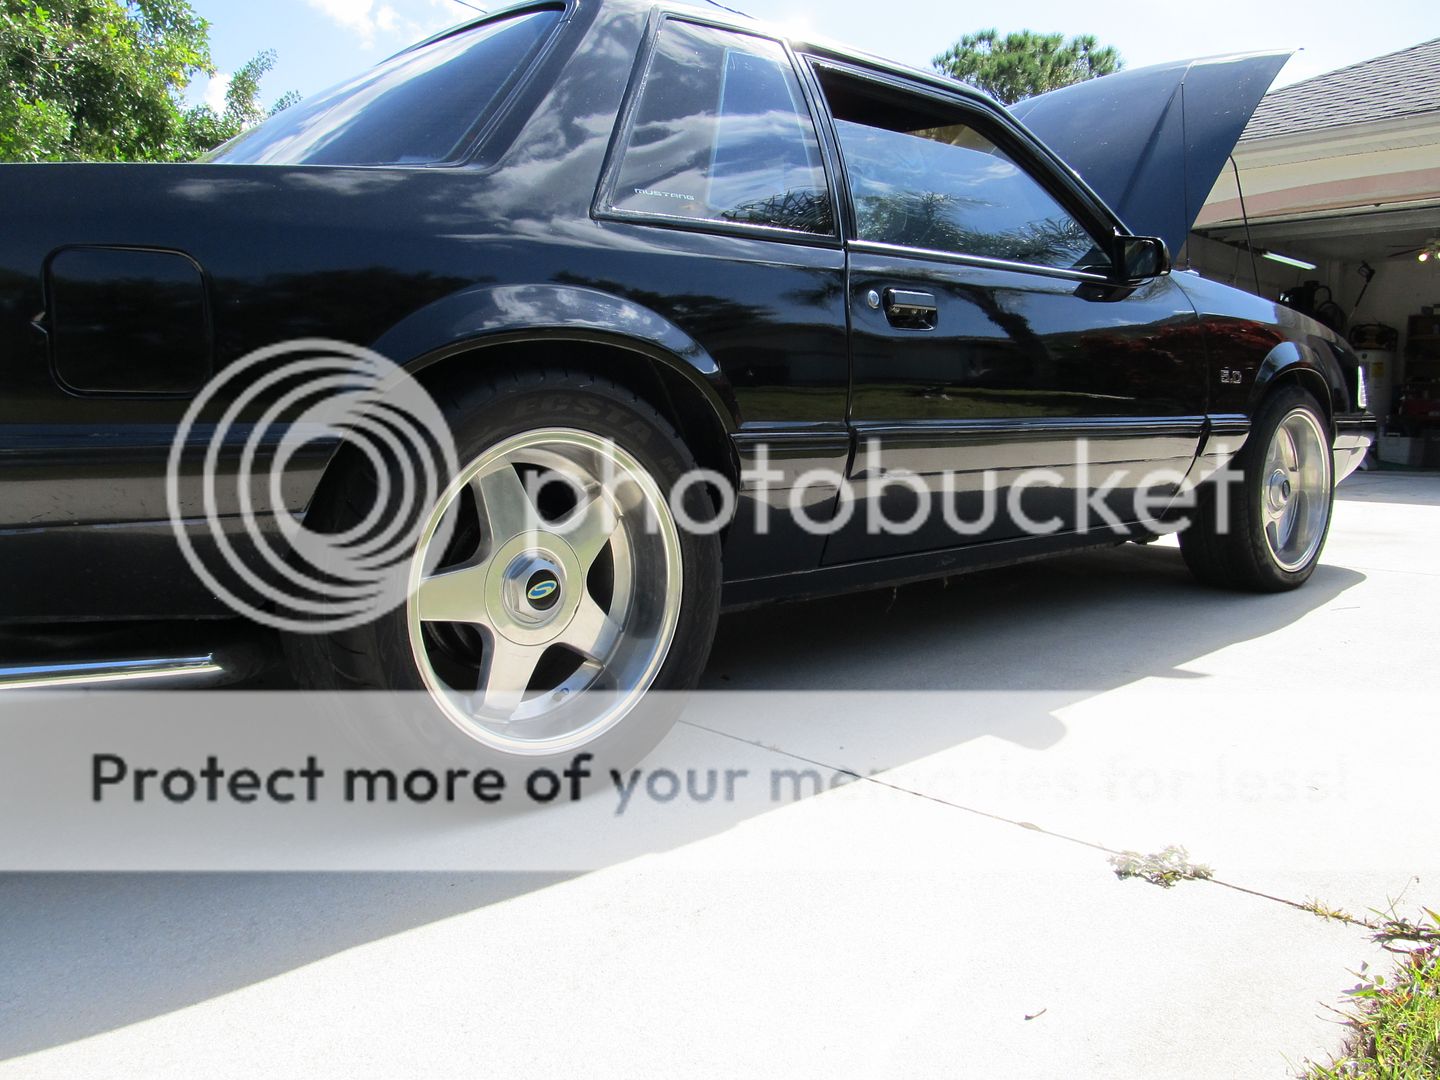 79 1993 Mustang Steeda Pentar Wheels Rims Tires ROH Rial 4 Lug RARE Saleen 17"